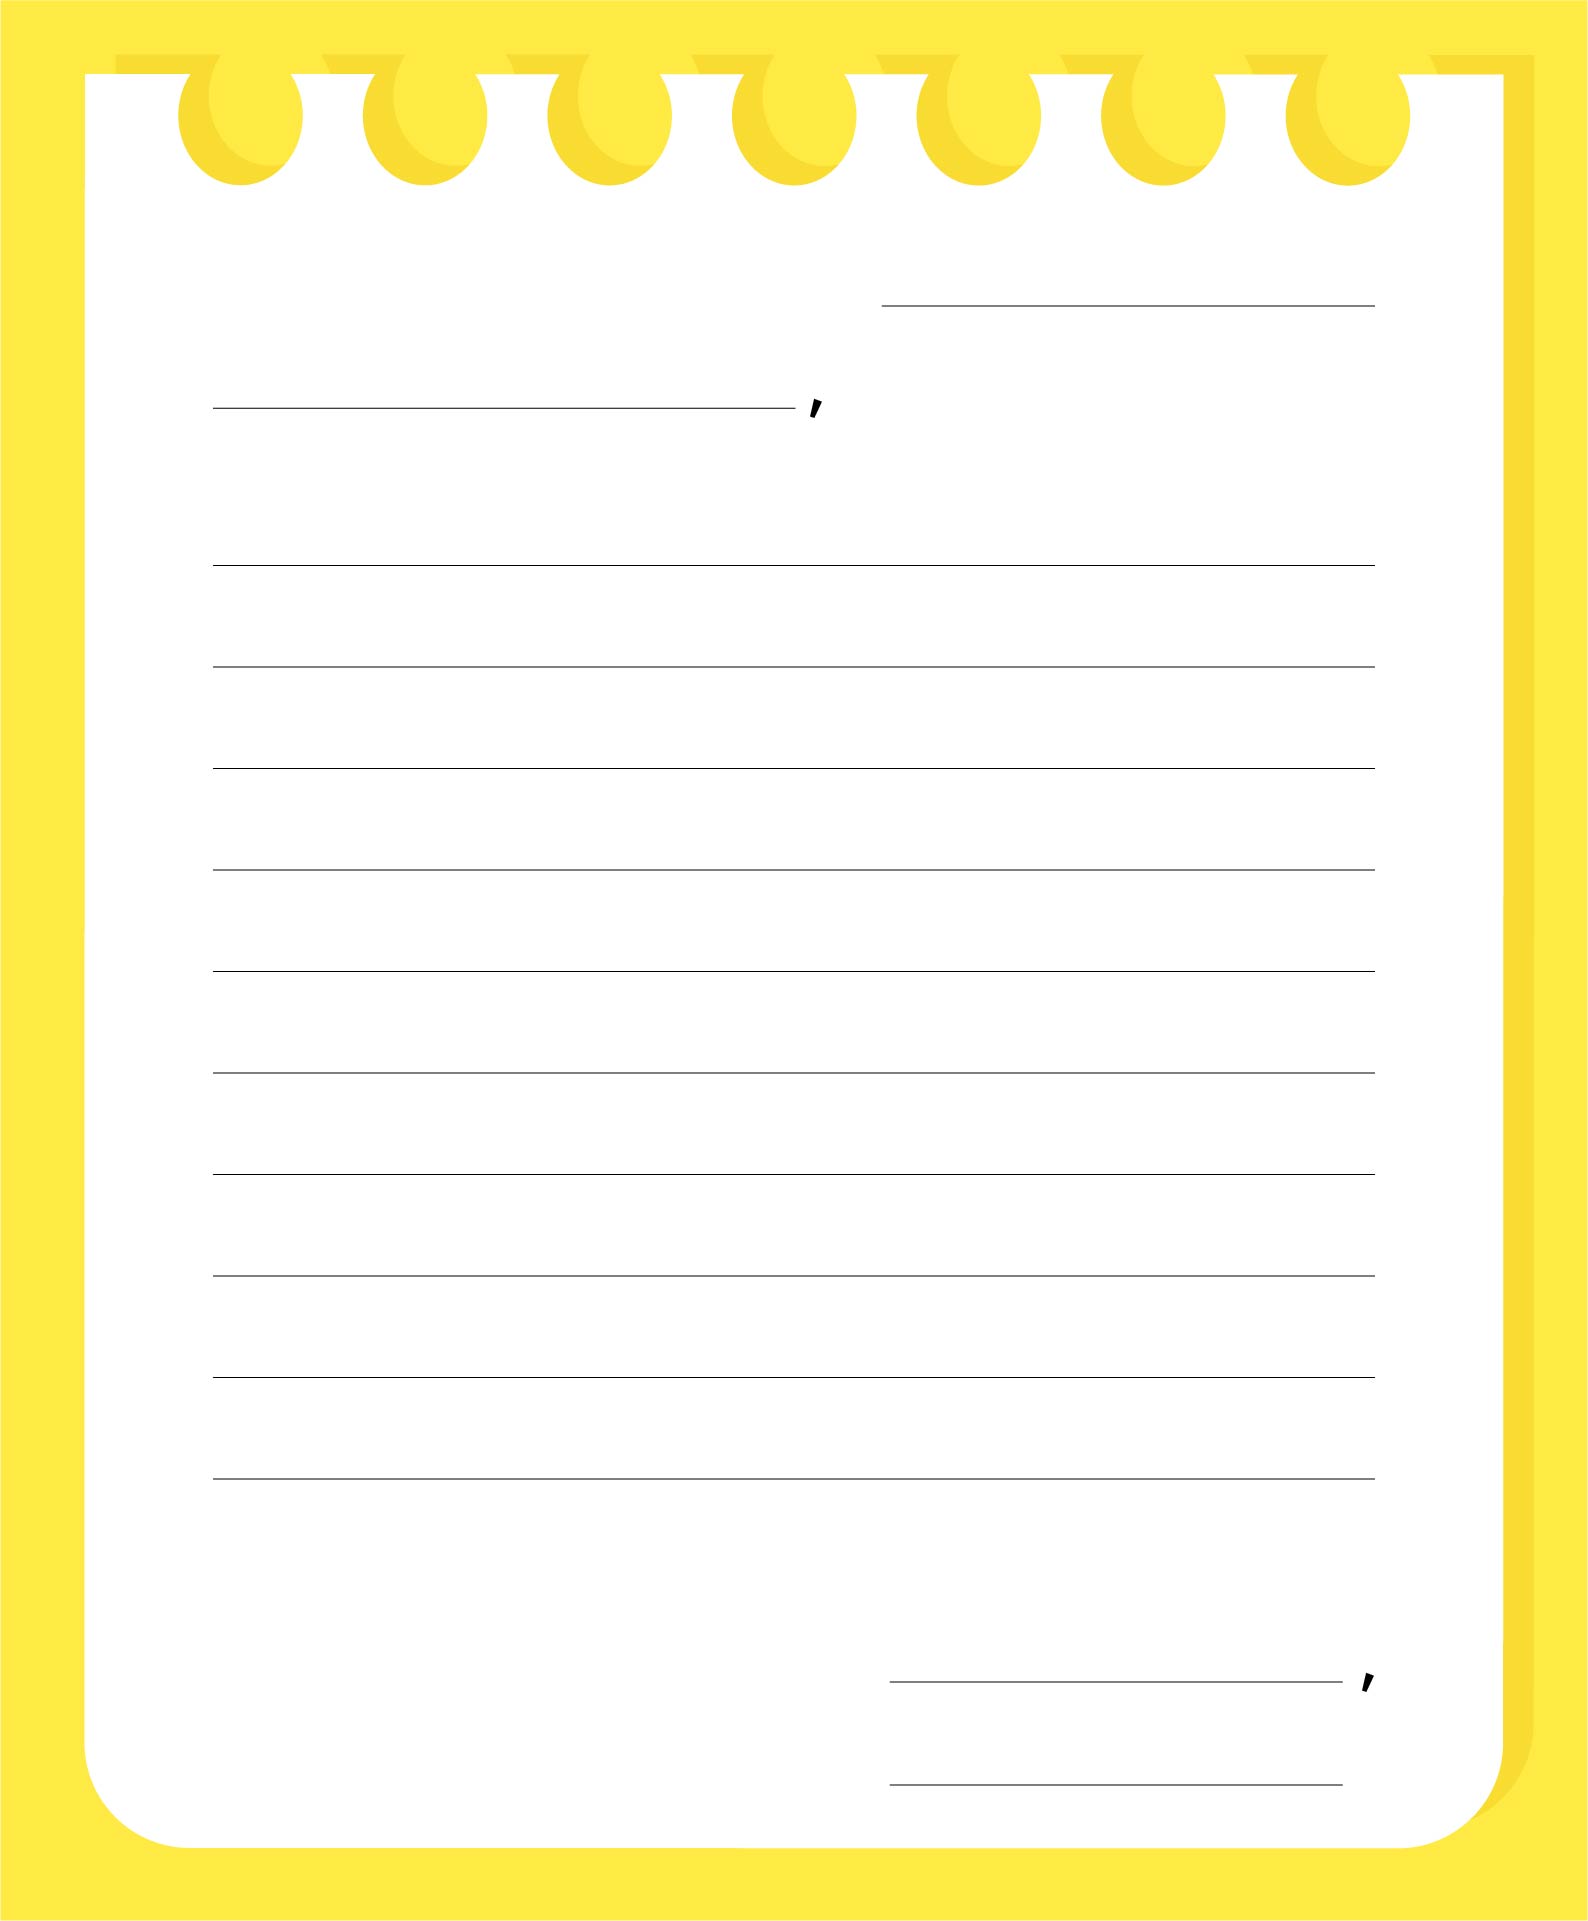 Blank Letter Template Printable